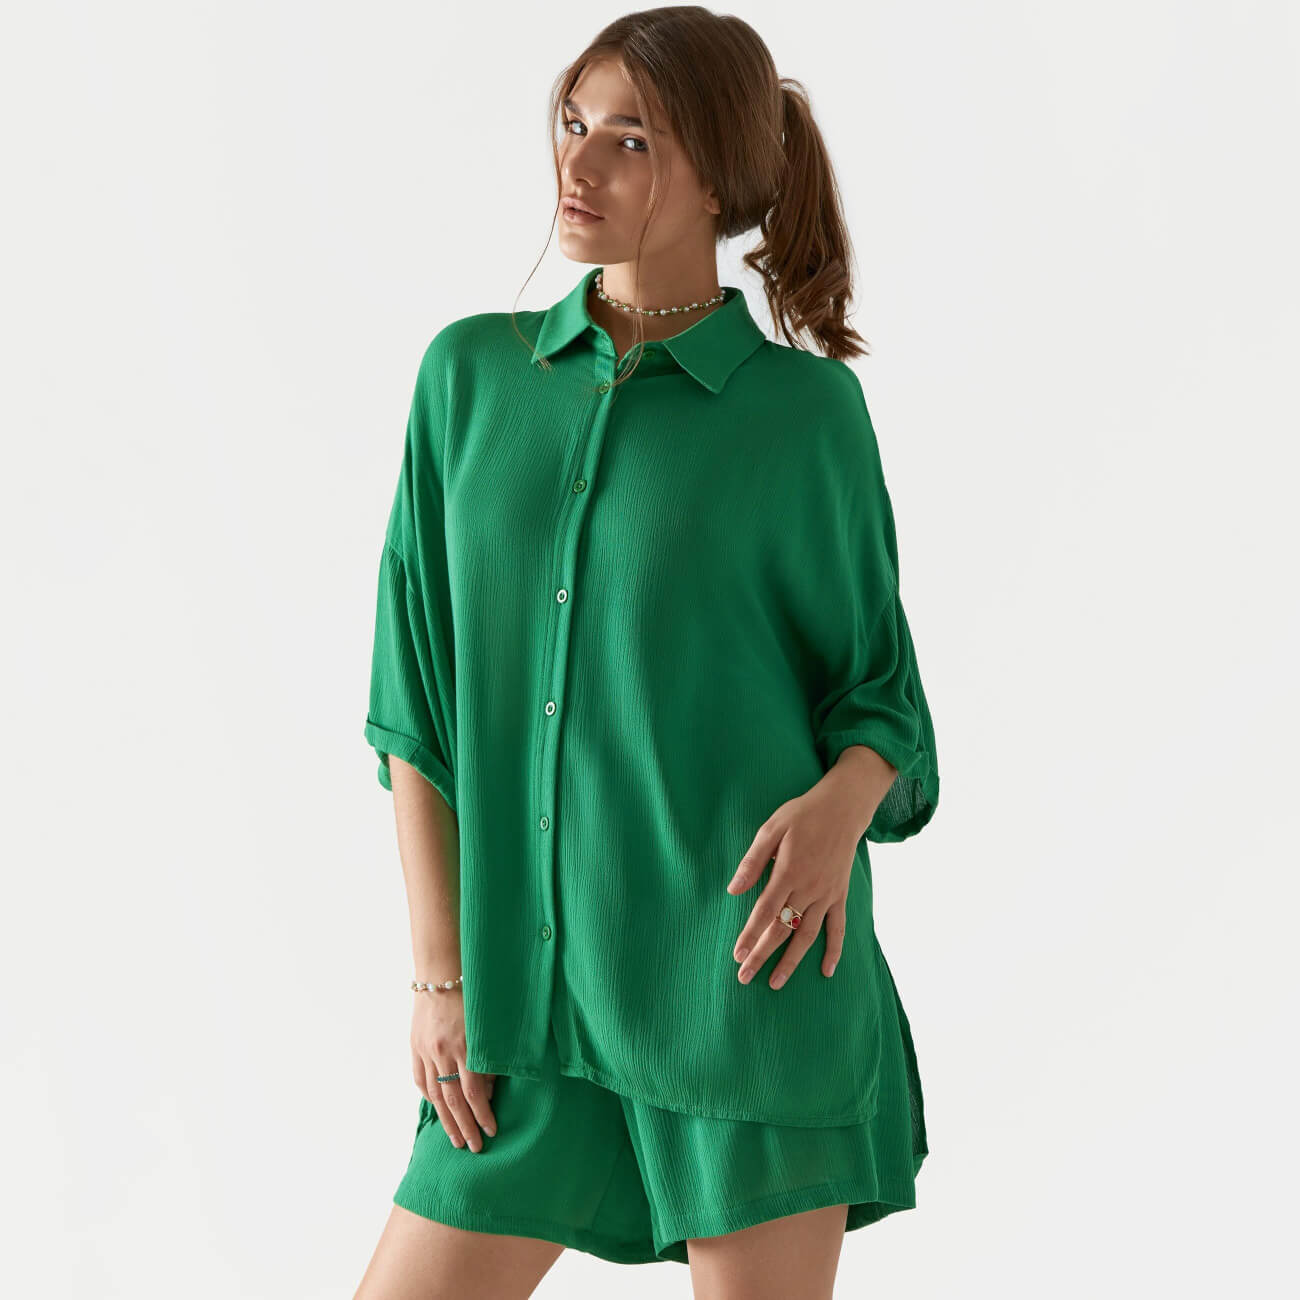 Рубашка женская, р. M, с коротким рукавом, вискоза, зеленая, Julie - фото 1